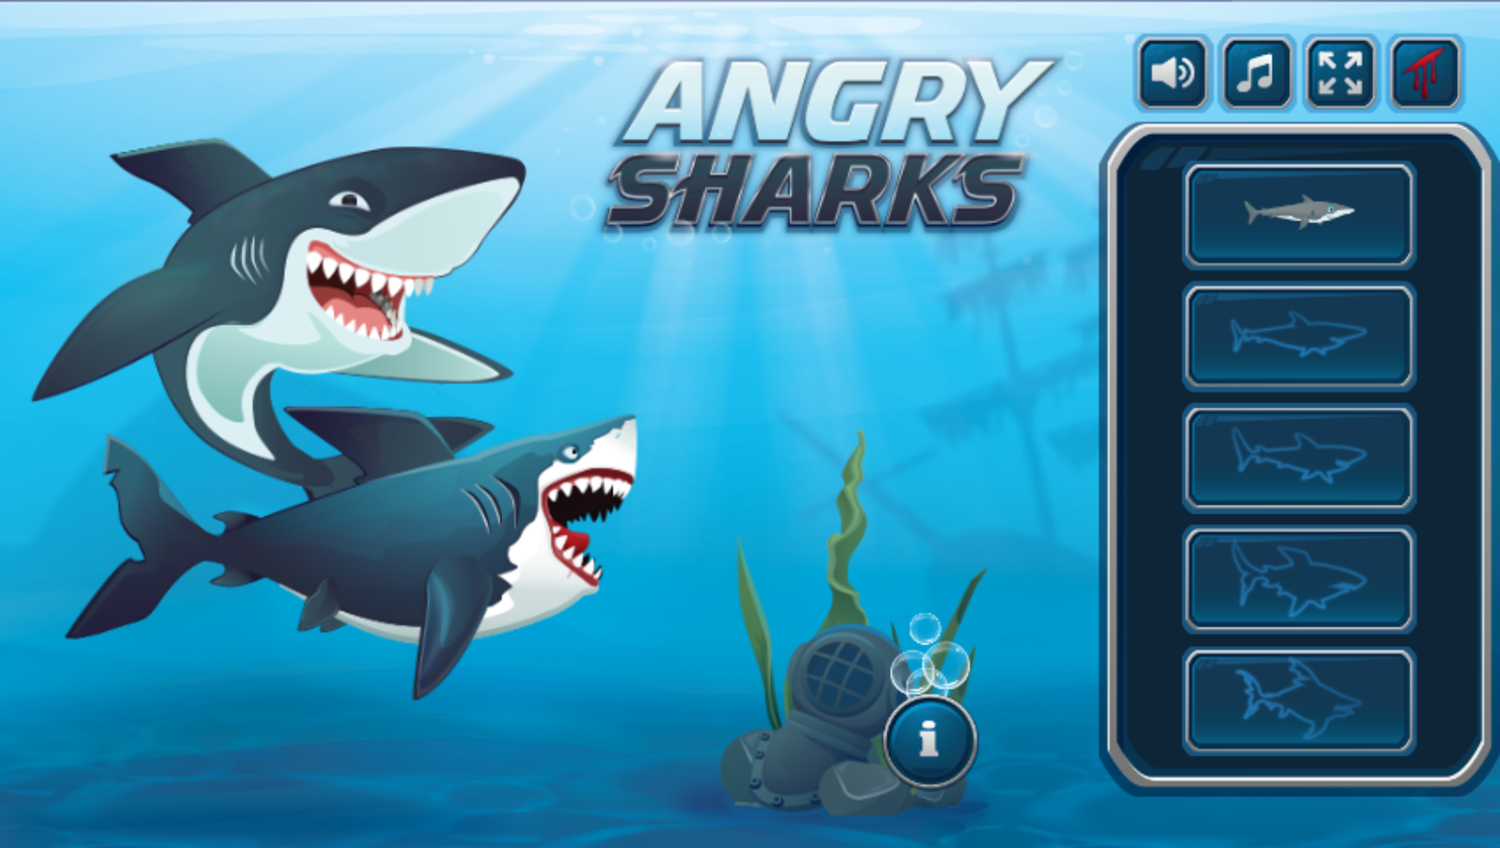 Angry Sharks Game Welcome Screen Screenshot.